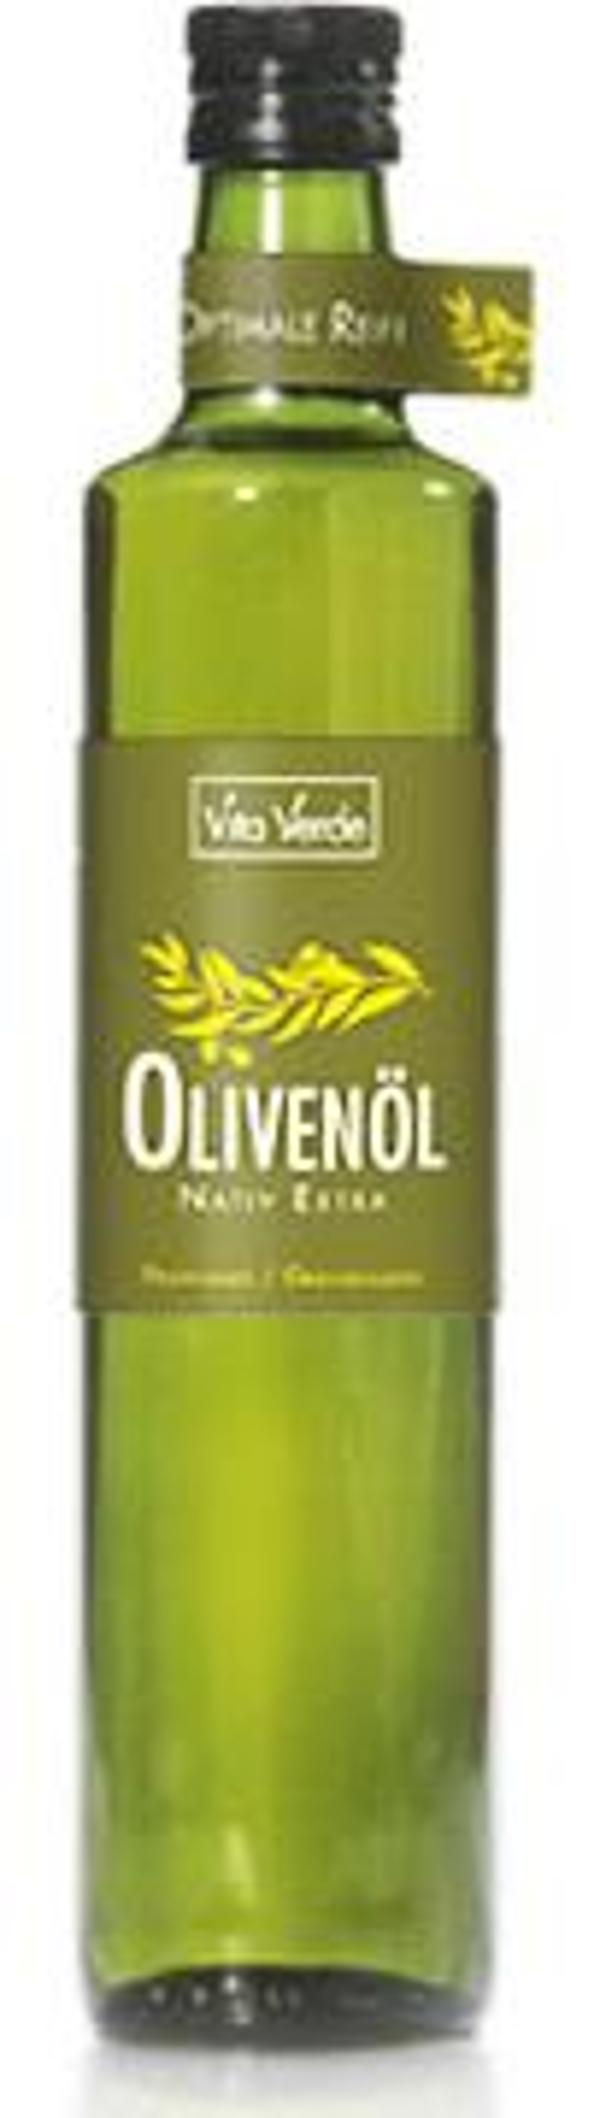 Produktfoto zu Olivenöl 250ml, Vita Verde